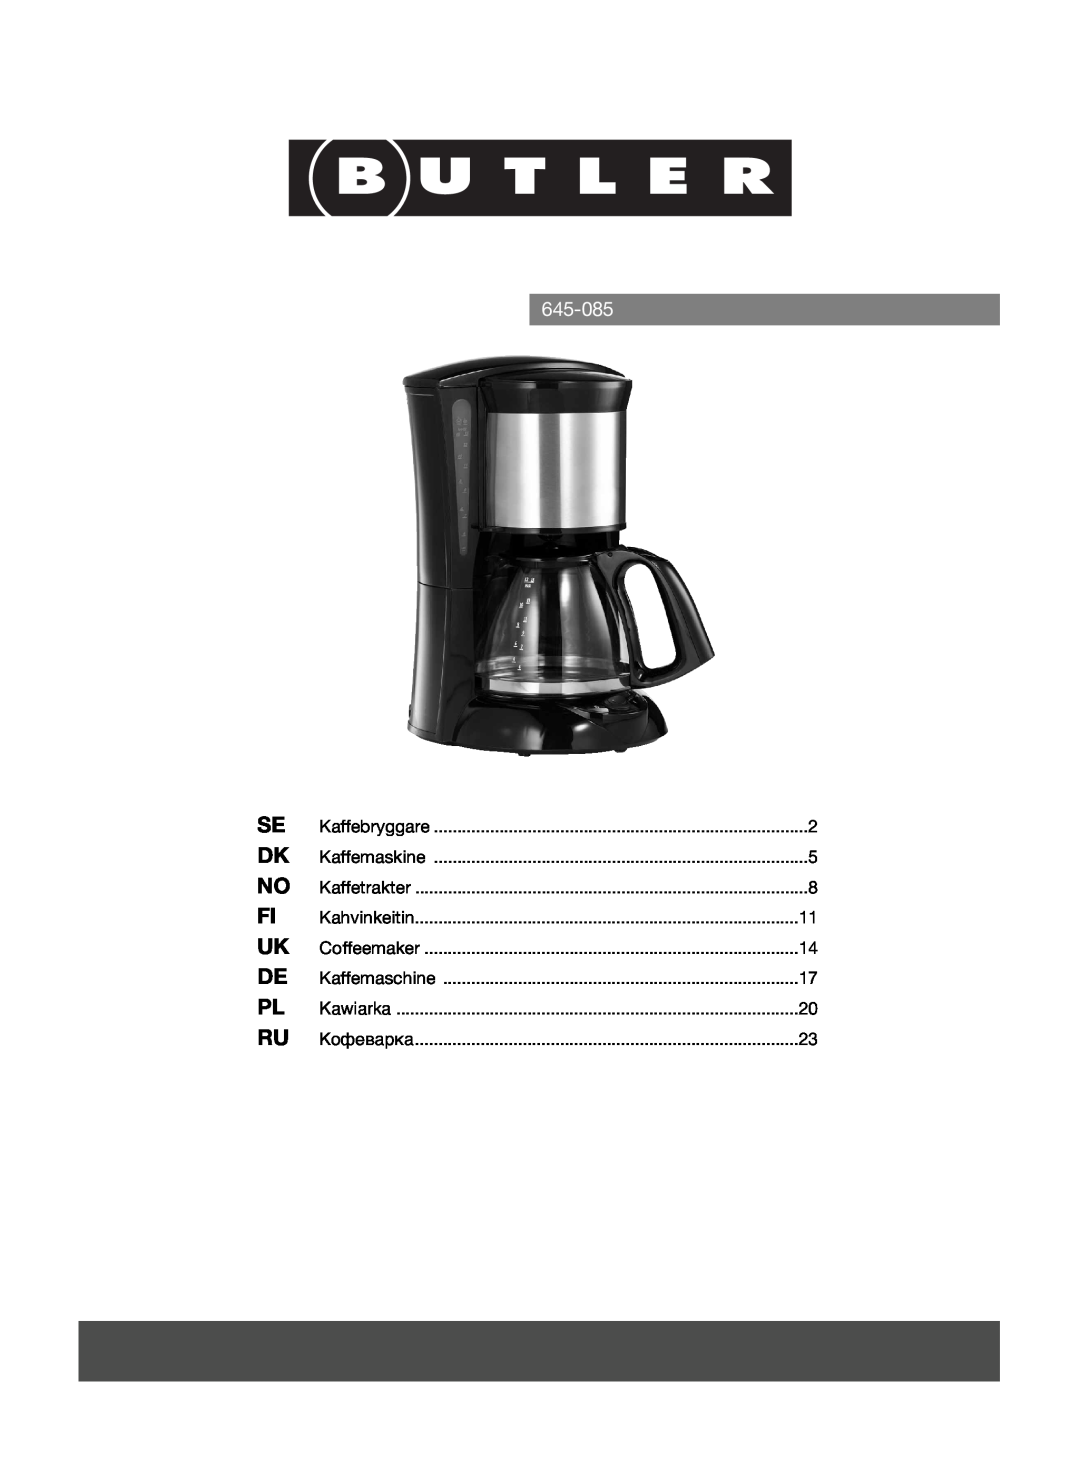 Melissa 645-085 manual Kaffebryggare, Kaffemaskine, Kaffetrakter, Kahvinkeitin, Coffeemaker, Kaffemaschine, Kawiarka 